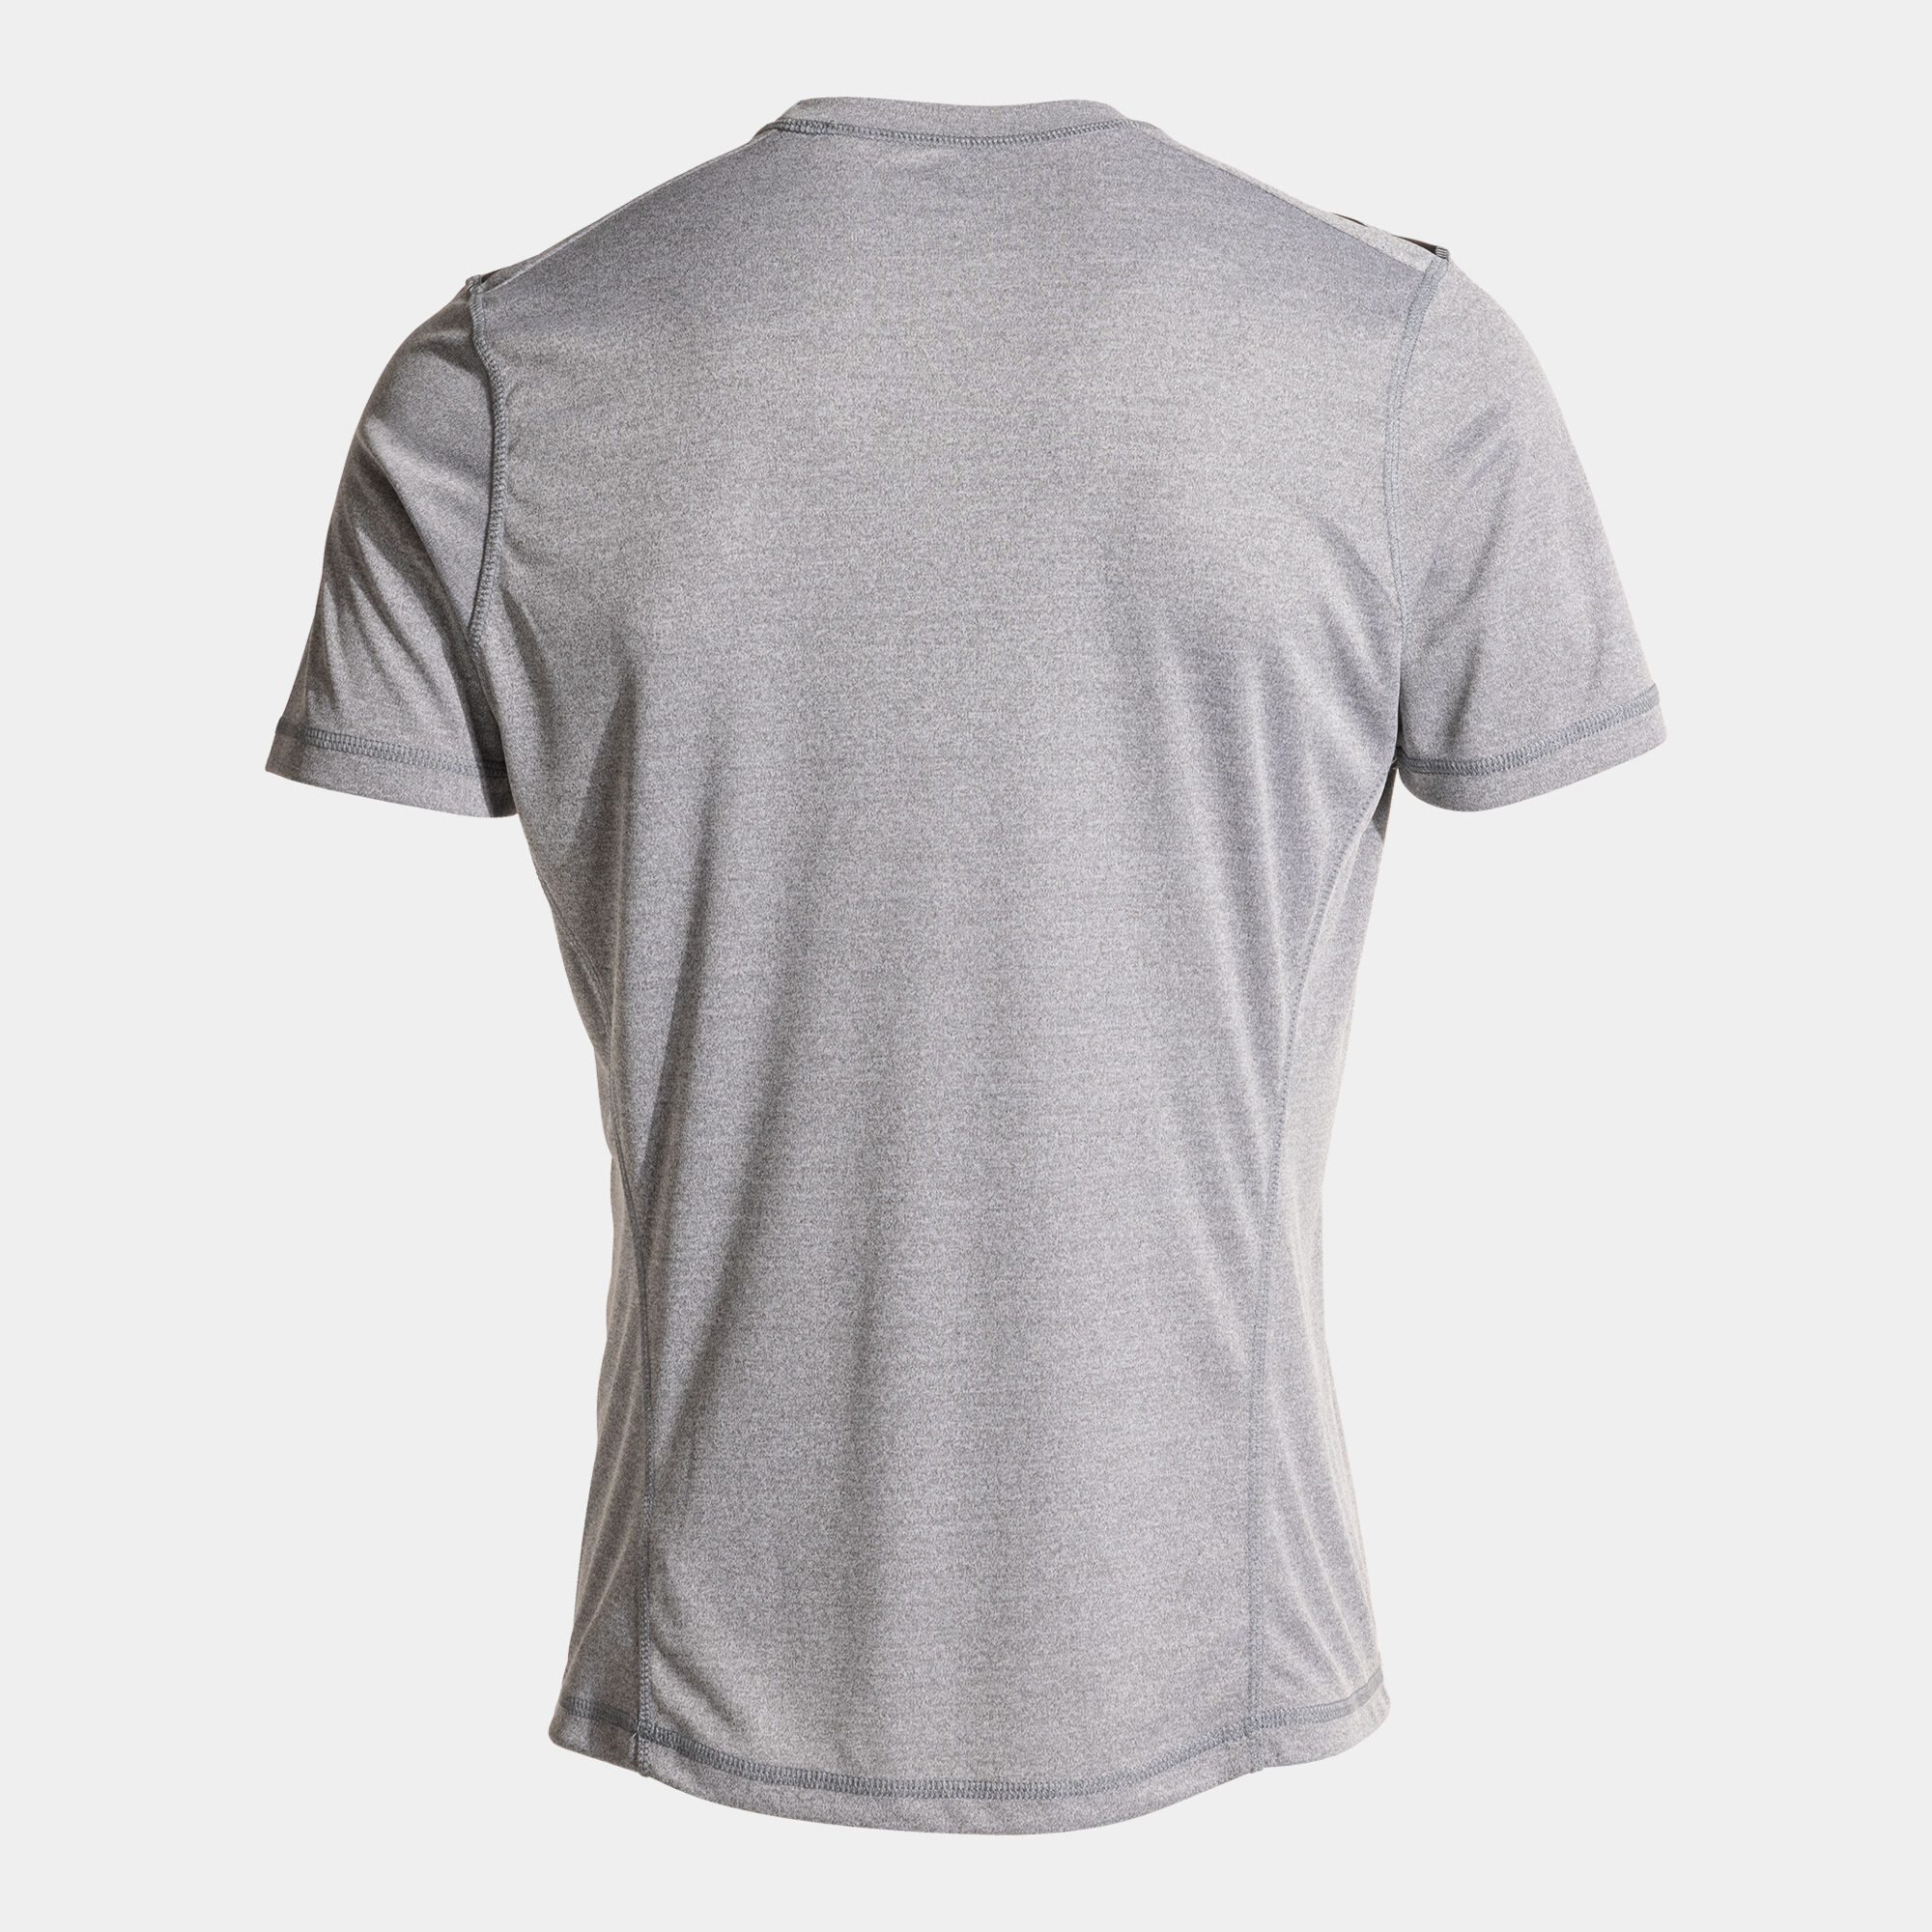 Camiseta manga corta hombre Olimpiada handball gris melange negro